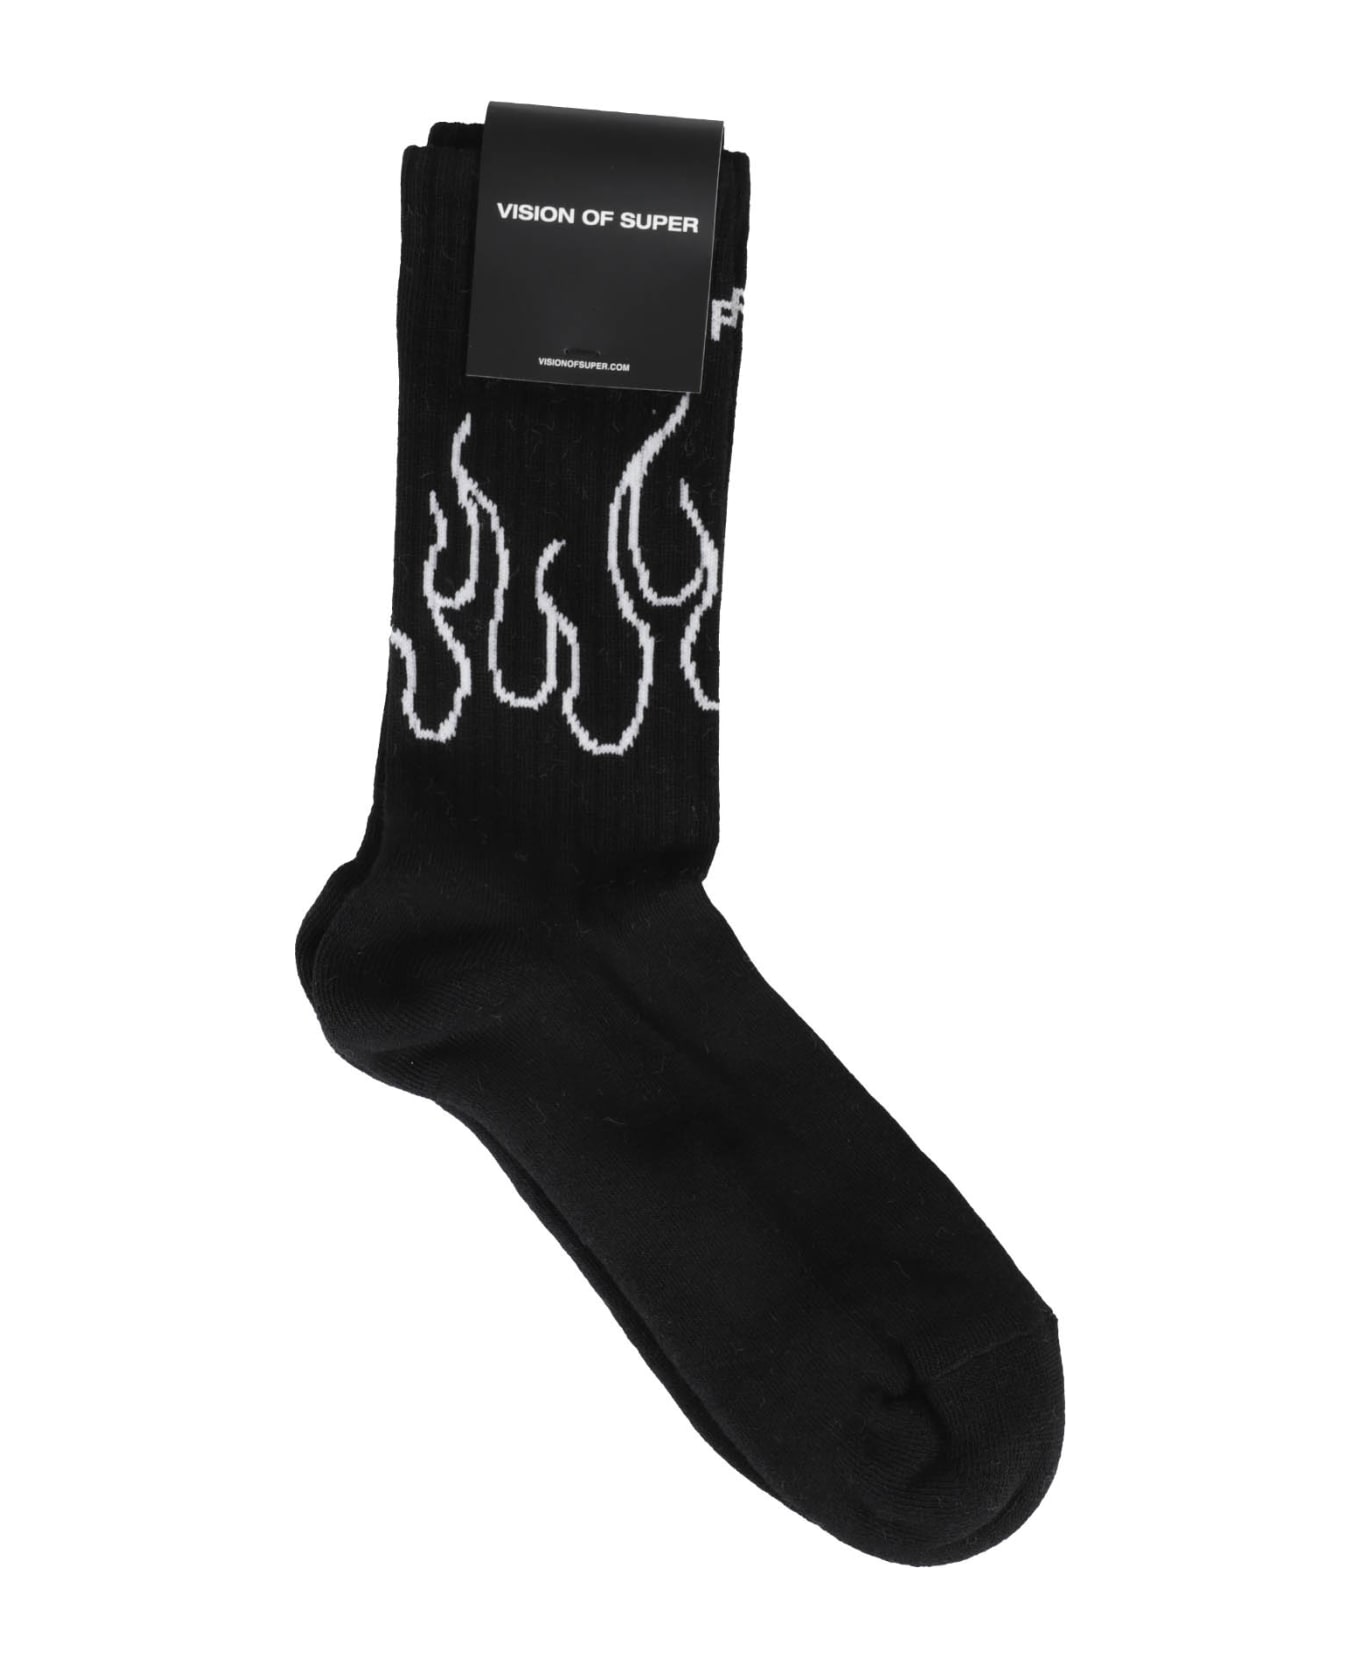 Vision of Super Black Socks With White Contour - Black White 靴下